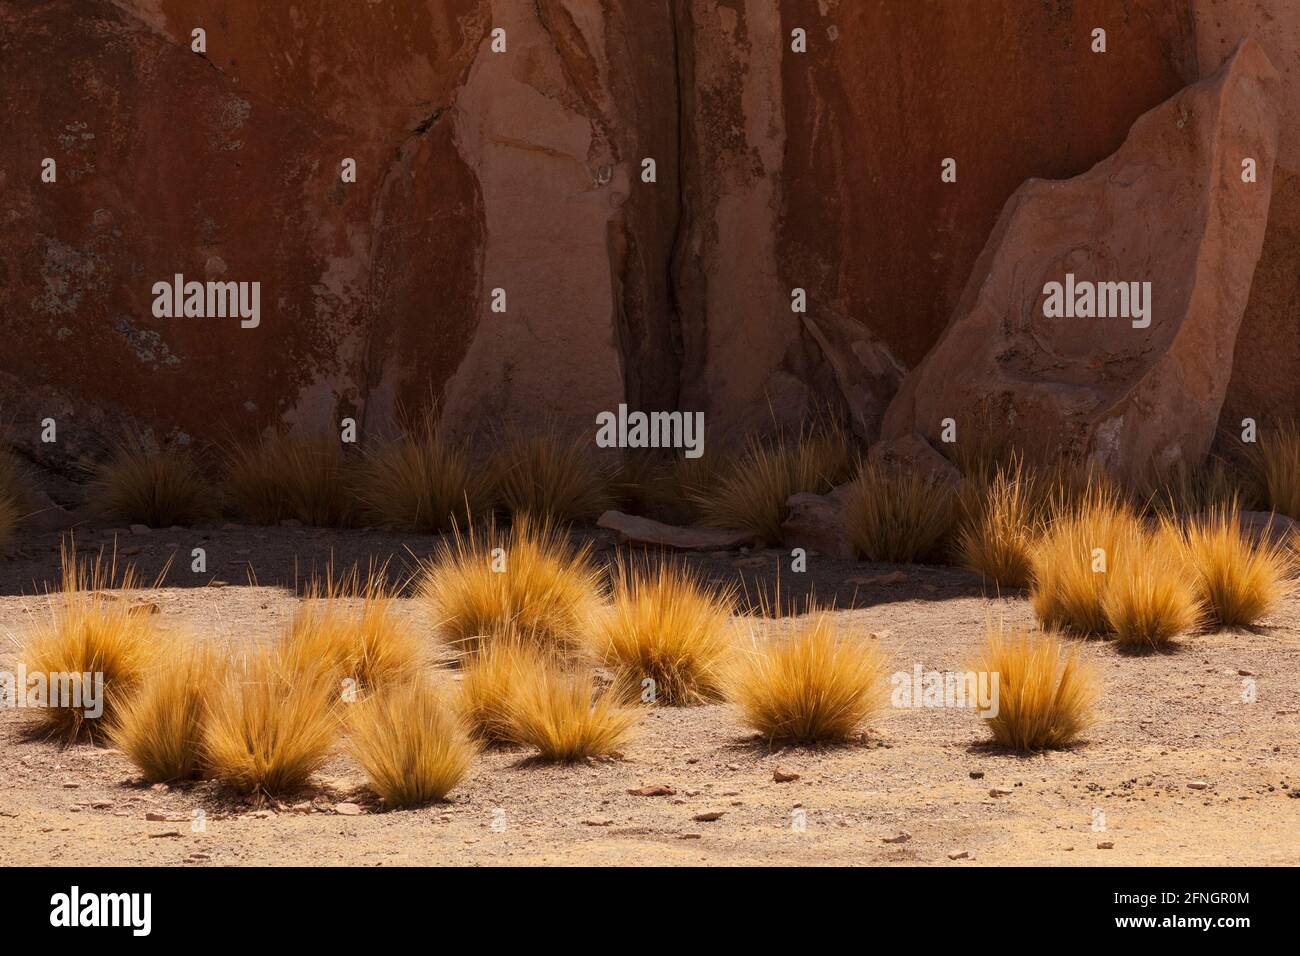 Clumps of desert grass, Atacama desert, Bolivia, Stock Photo